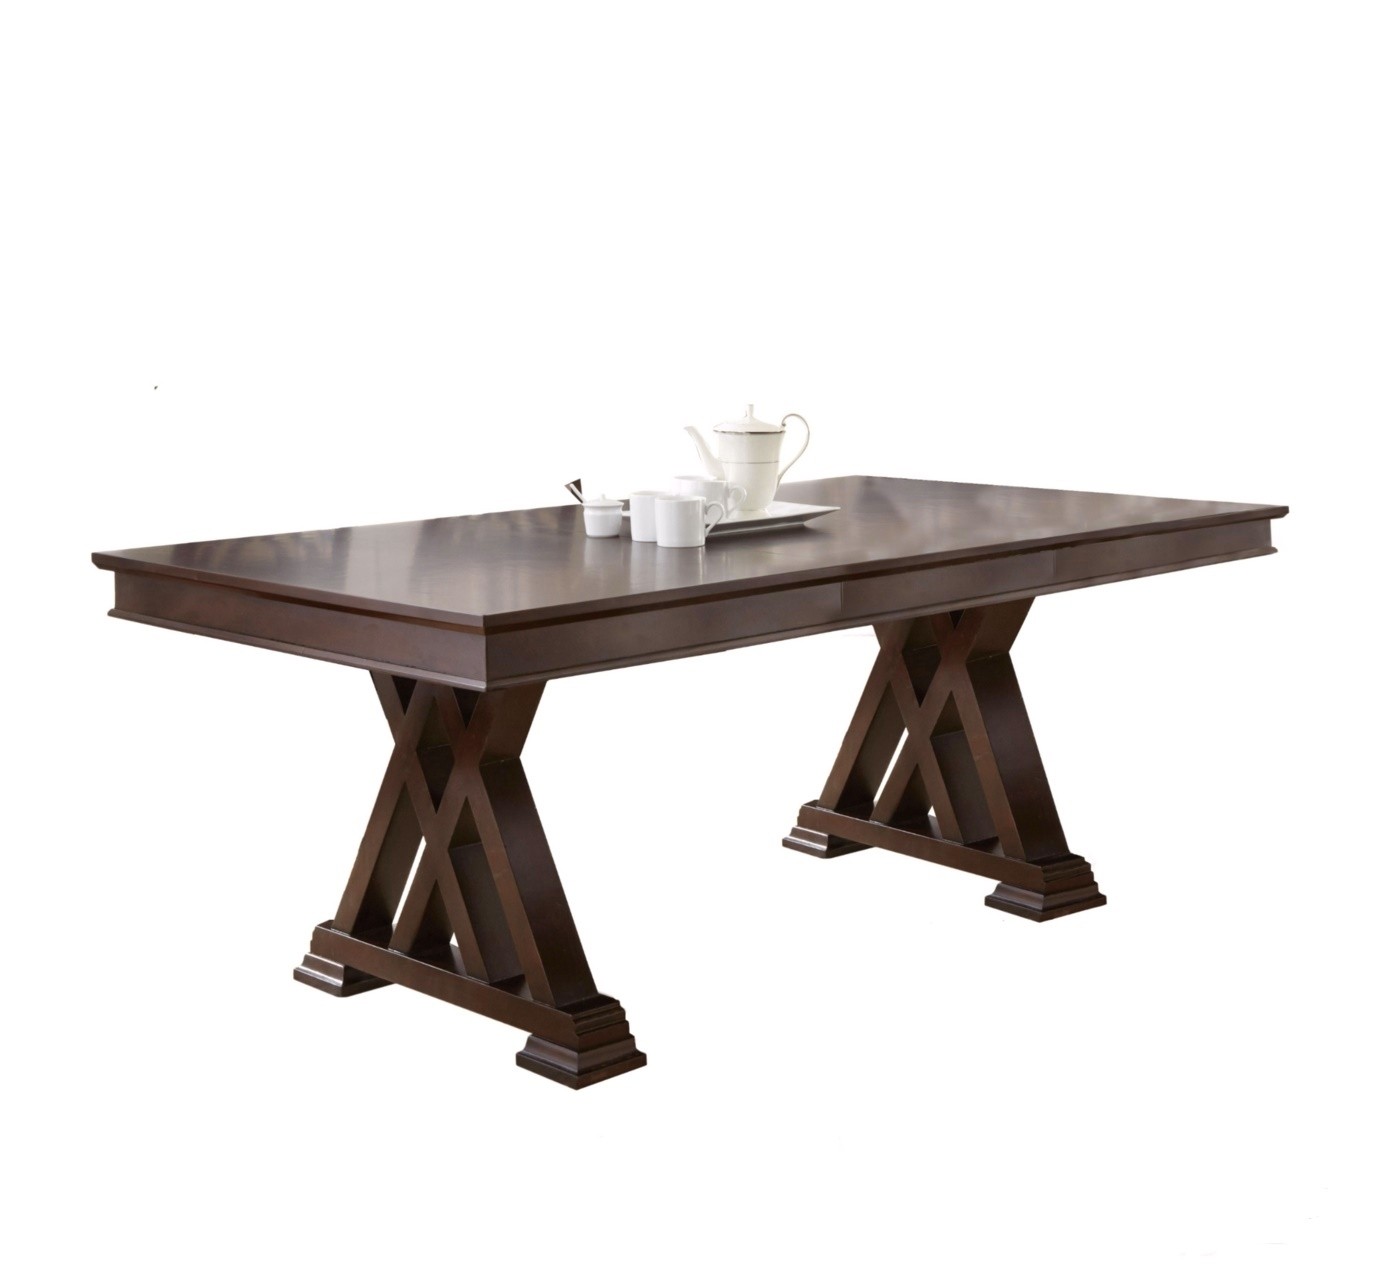 Adrian primavera double pedestal dining table in espresso